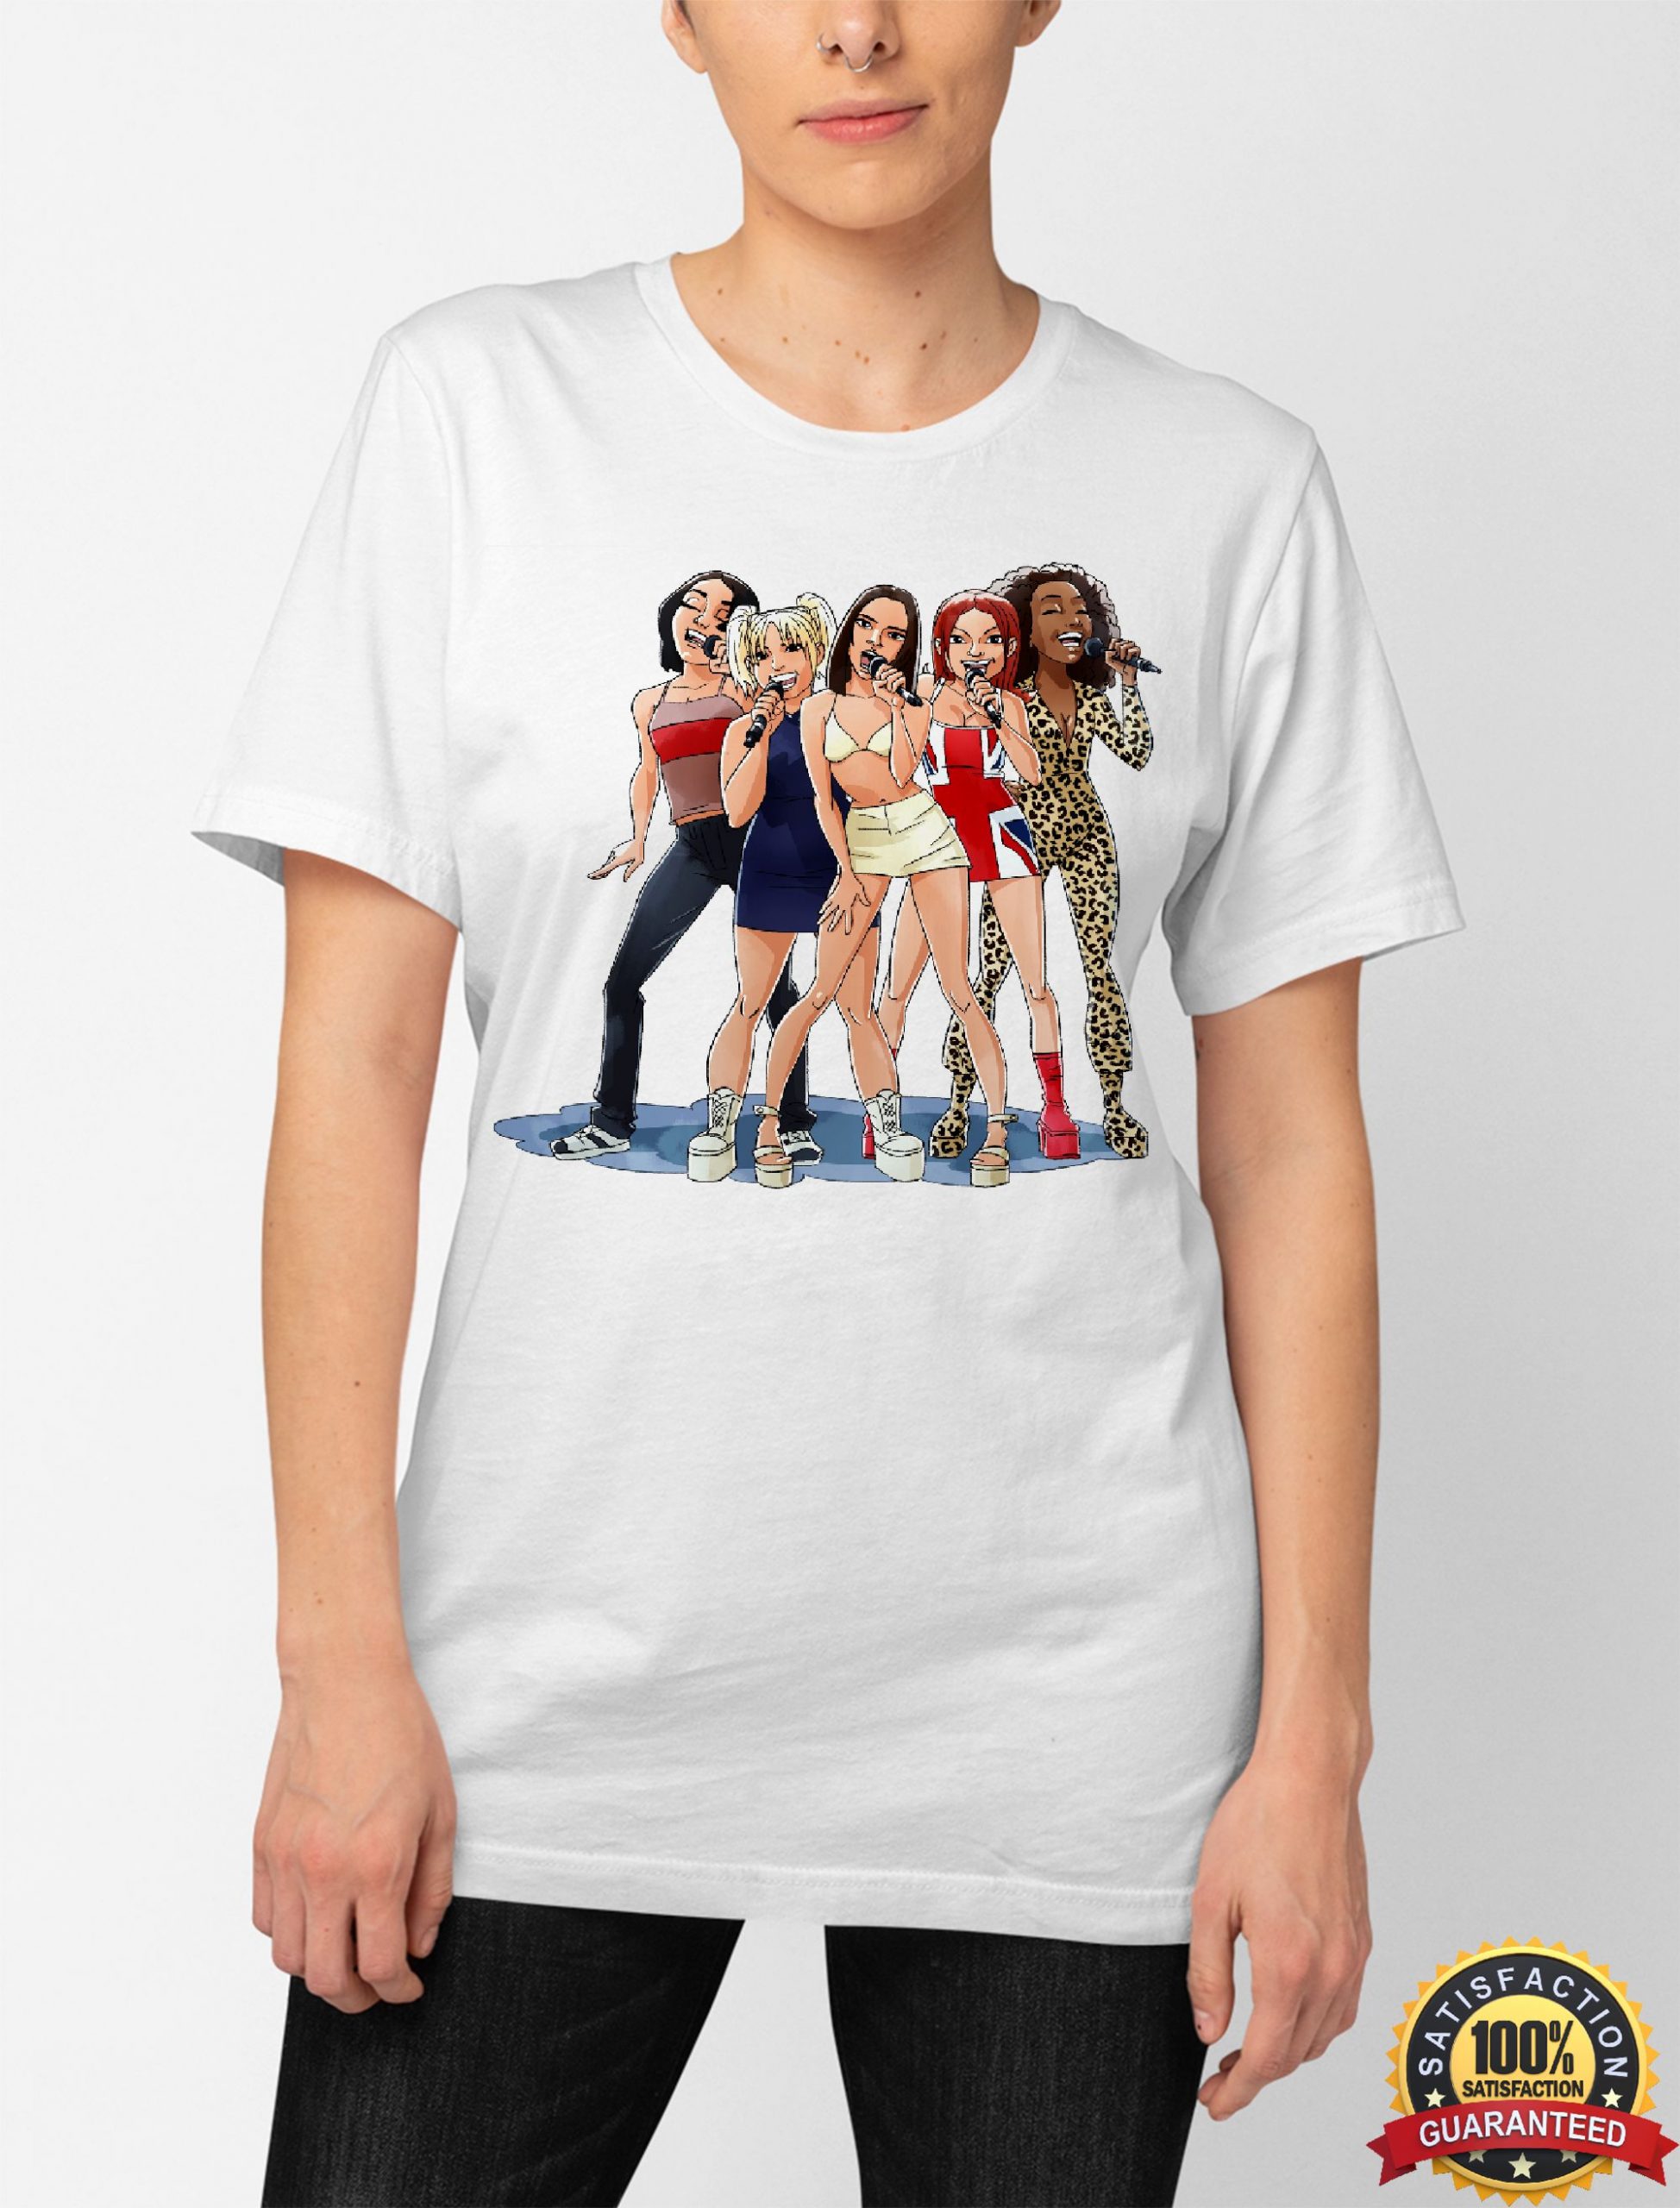 Spice Girls tshirt